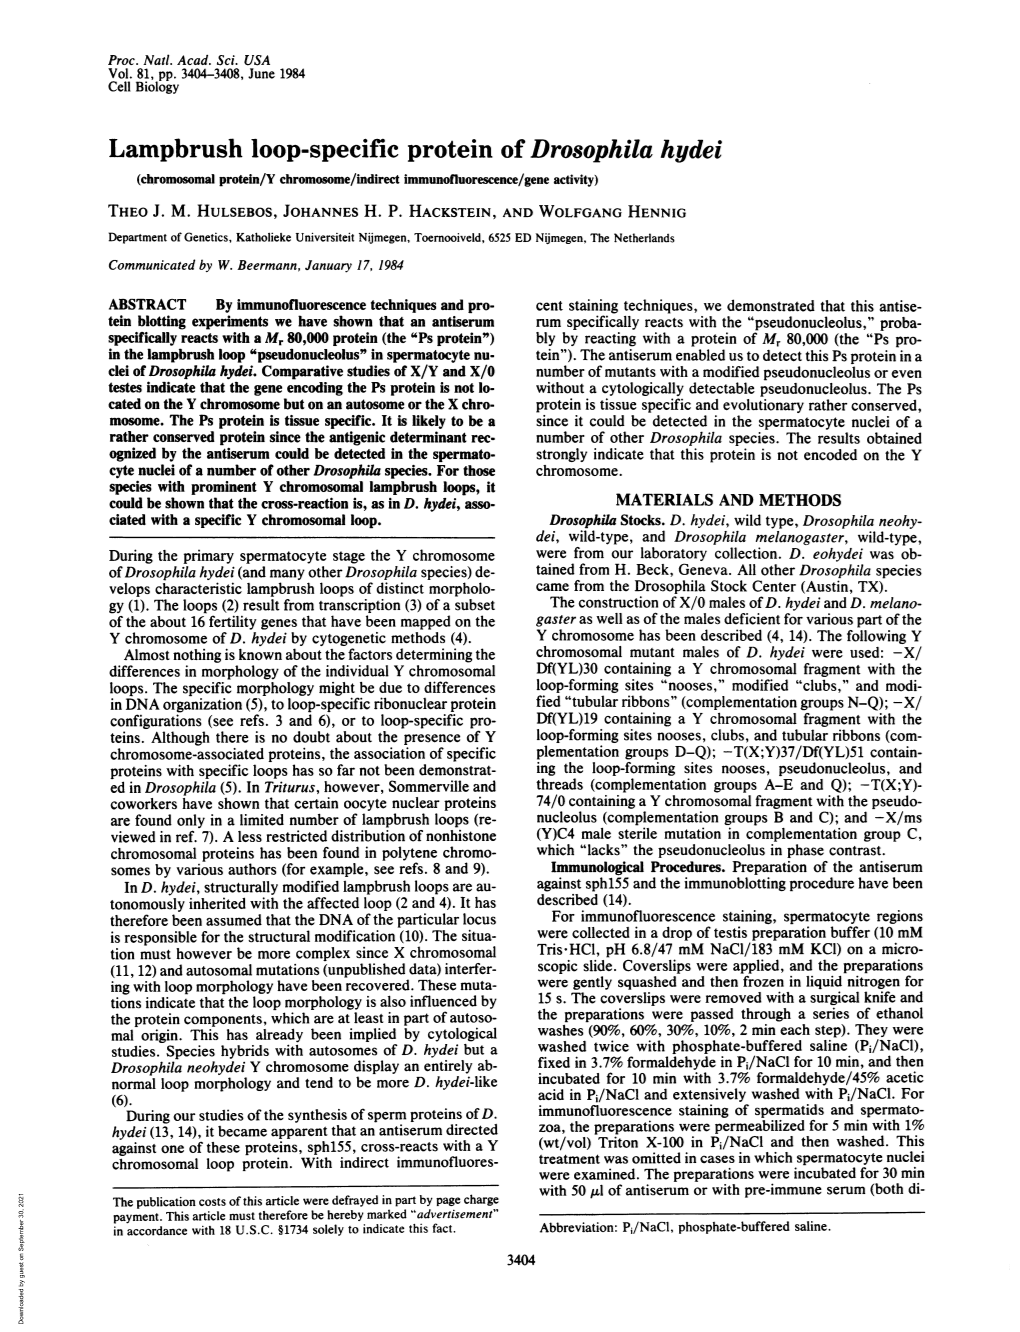 Lampbrush Loop-Specific Protein of Drosophila Hydei (Chromosomal Protein/Y Chromosome/Indirect Immunofluorescence/Gene Activity) THEO J